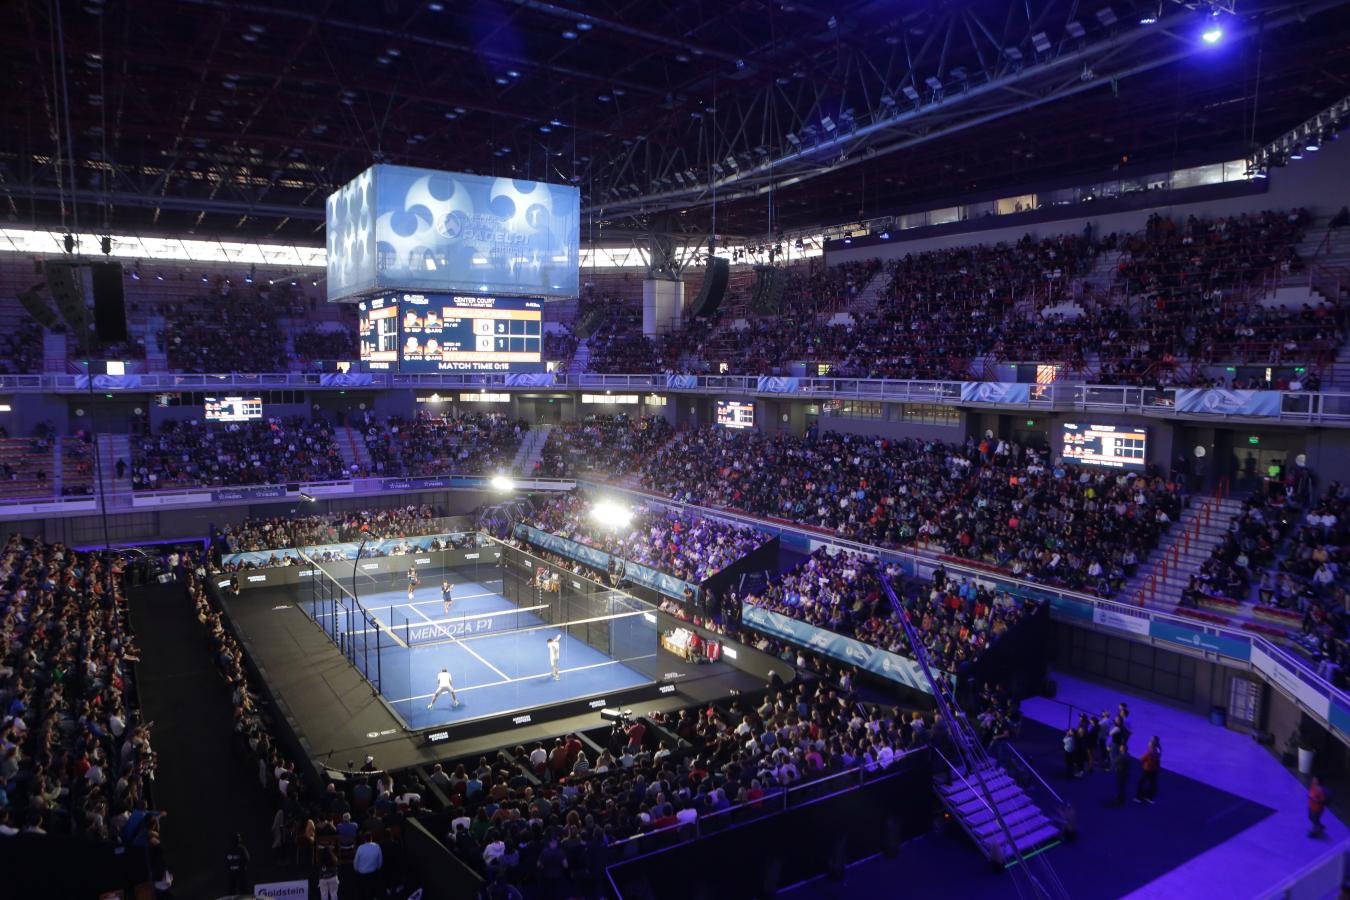 Imagen La cancha central del Aconcagua Arena, rodeada de miles de espectadores.